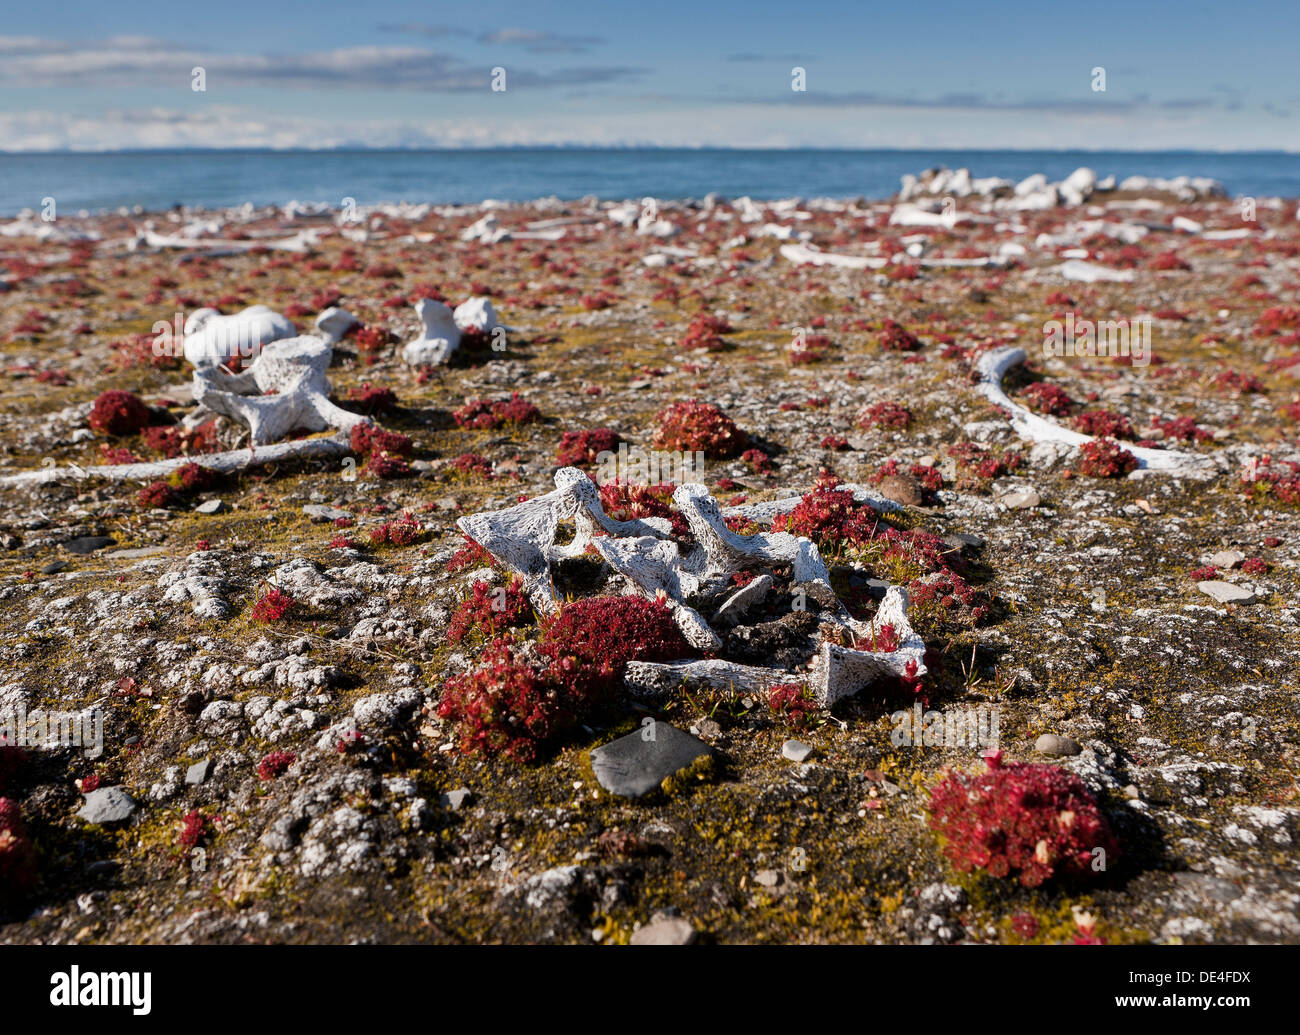 Walross Knochen, Dolerittneset, Spitzbergen Island, Spitzbergen, Norwegen Stockfoto